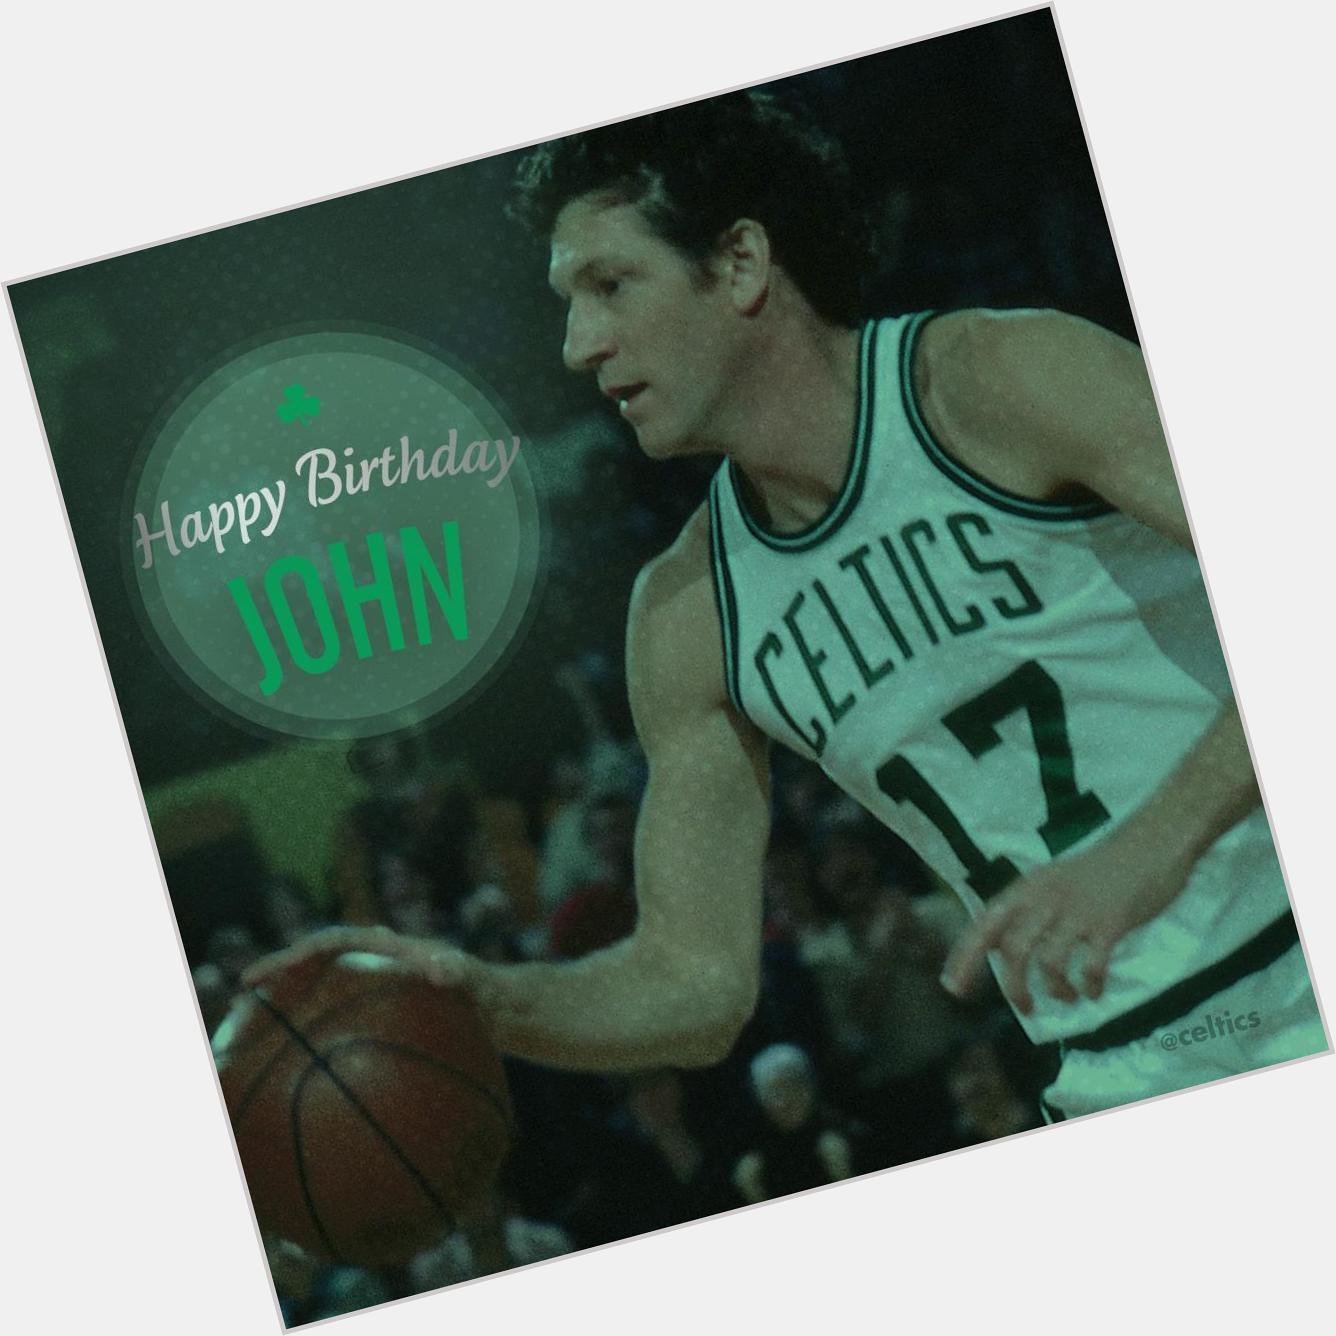 Happy Birthday to one of the greatest Celtics John Havlicek! 